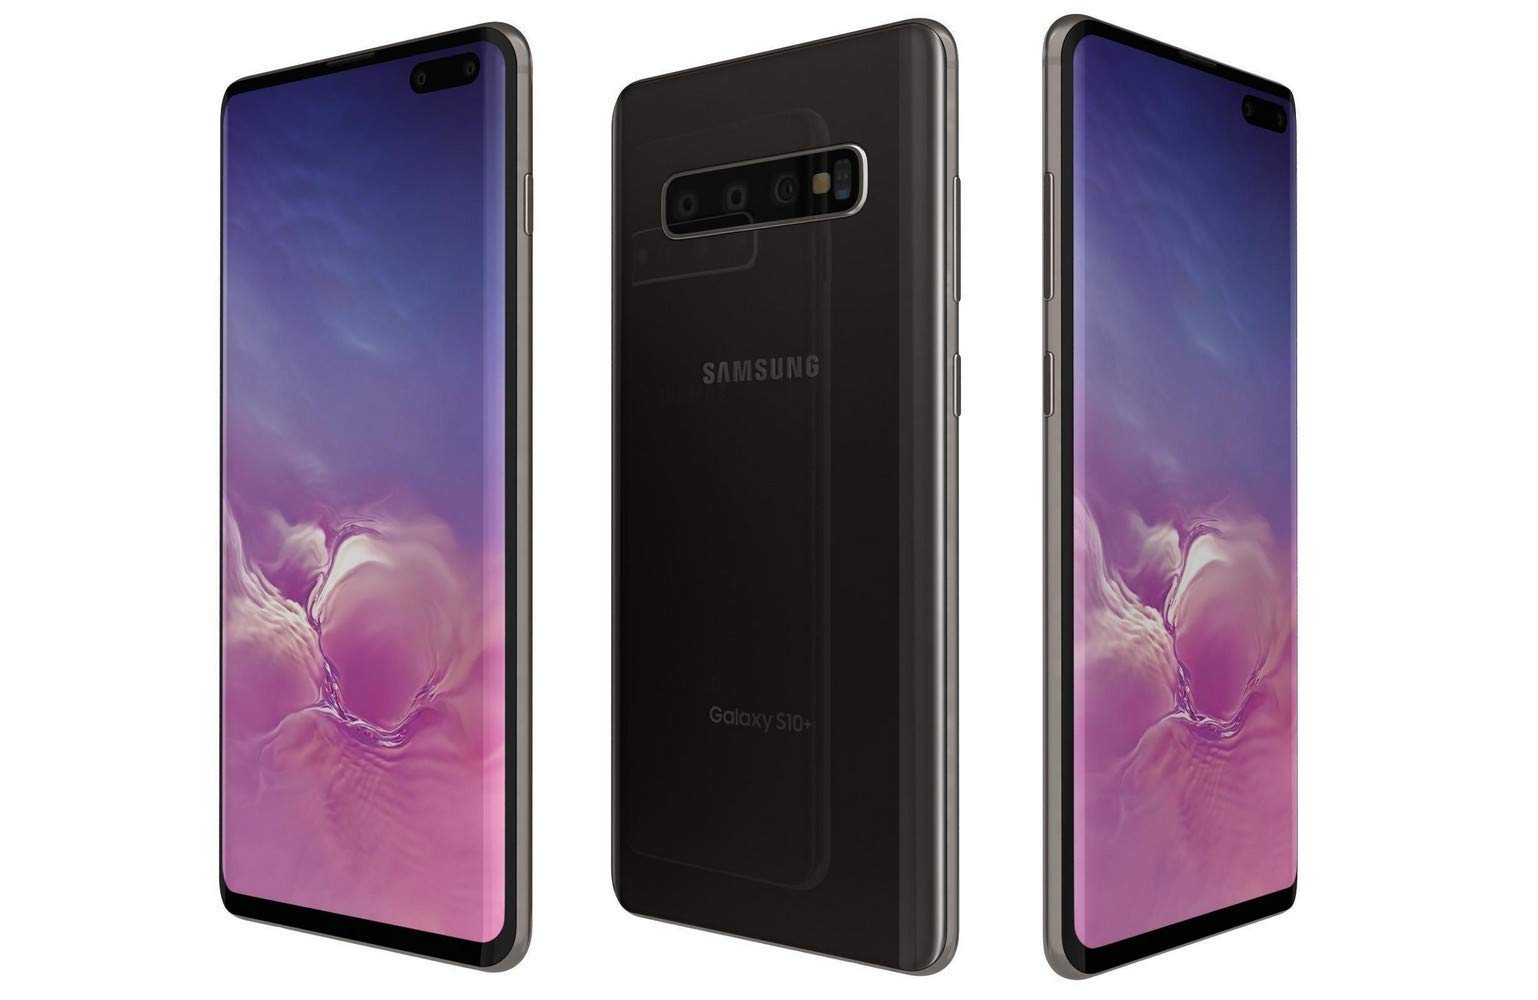 Samsung Galaxy S10, 128GB, Prism Black - Unlocked (Renewed)